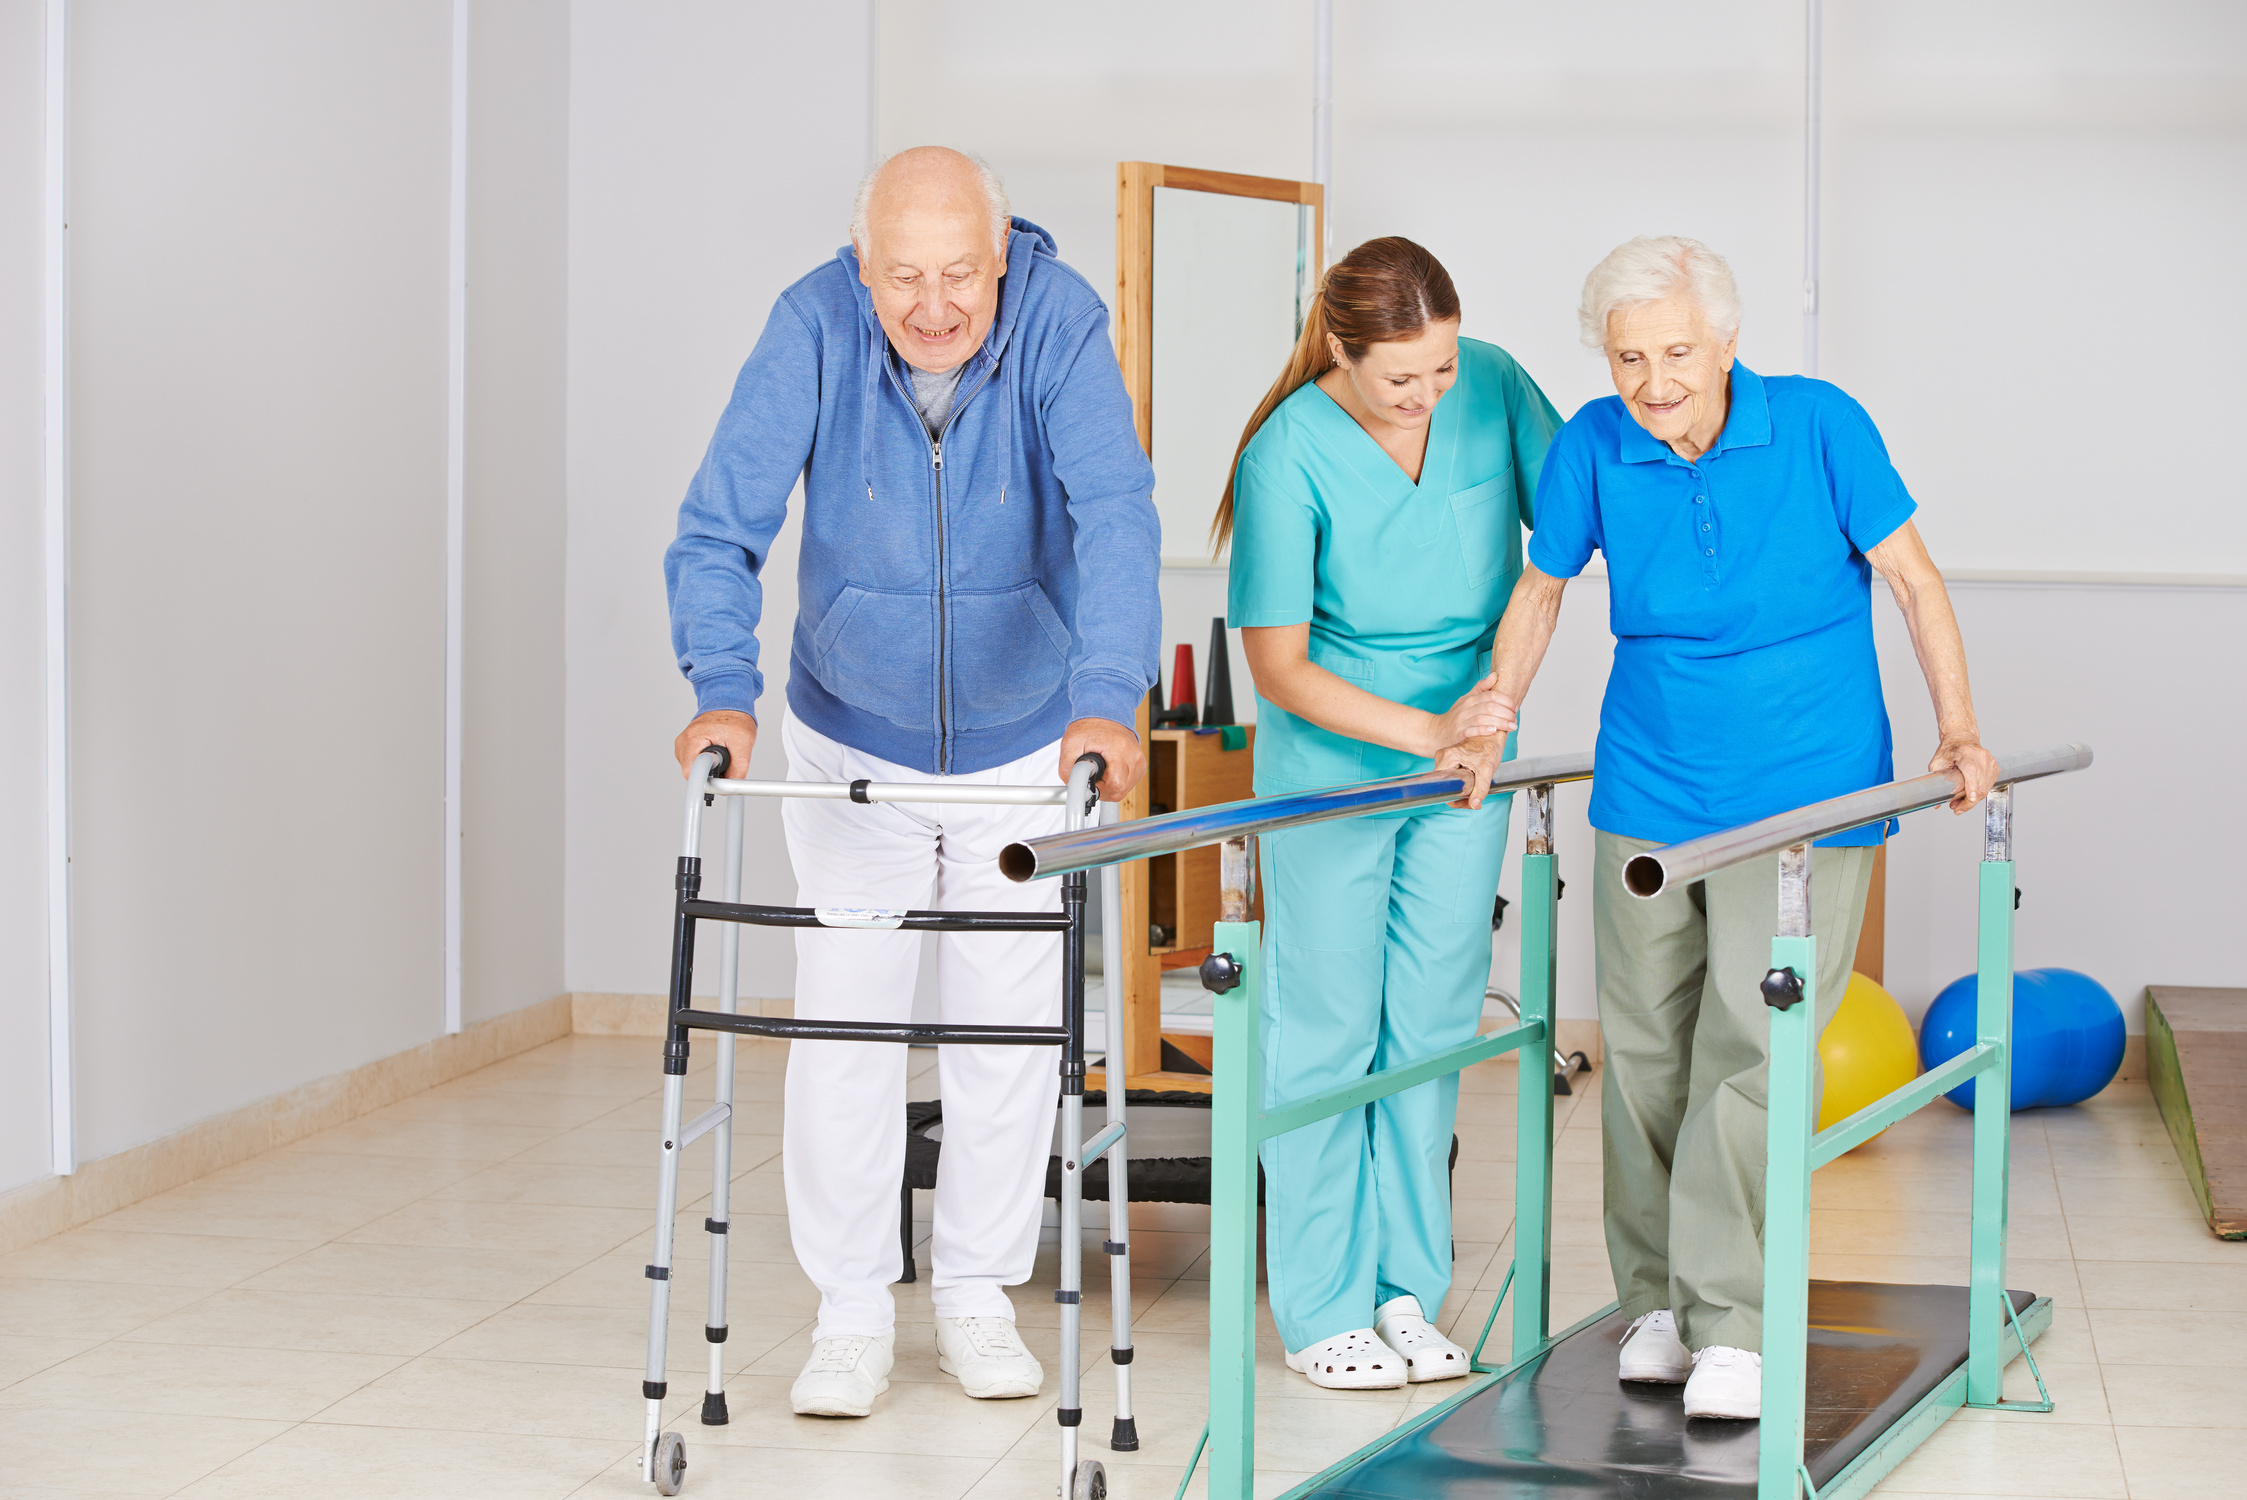 Seniors on Treadmill at Physiotherapy